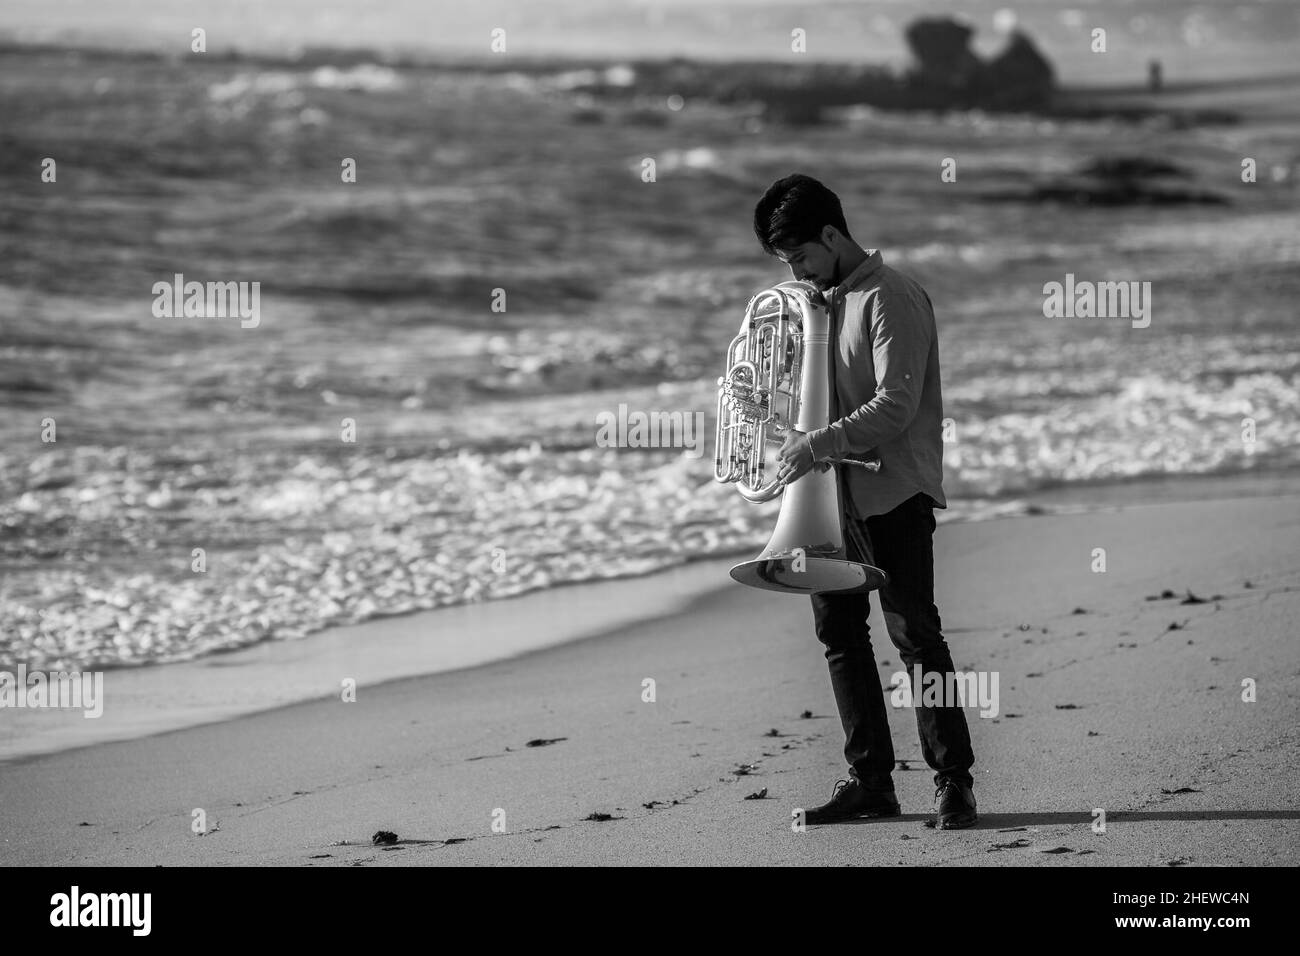 Musician with a tuba near the ocean shore. Black and white photo. Stock Photo